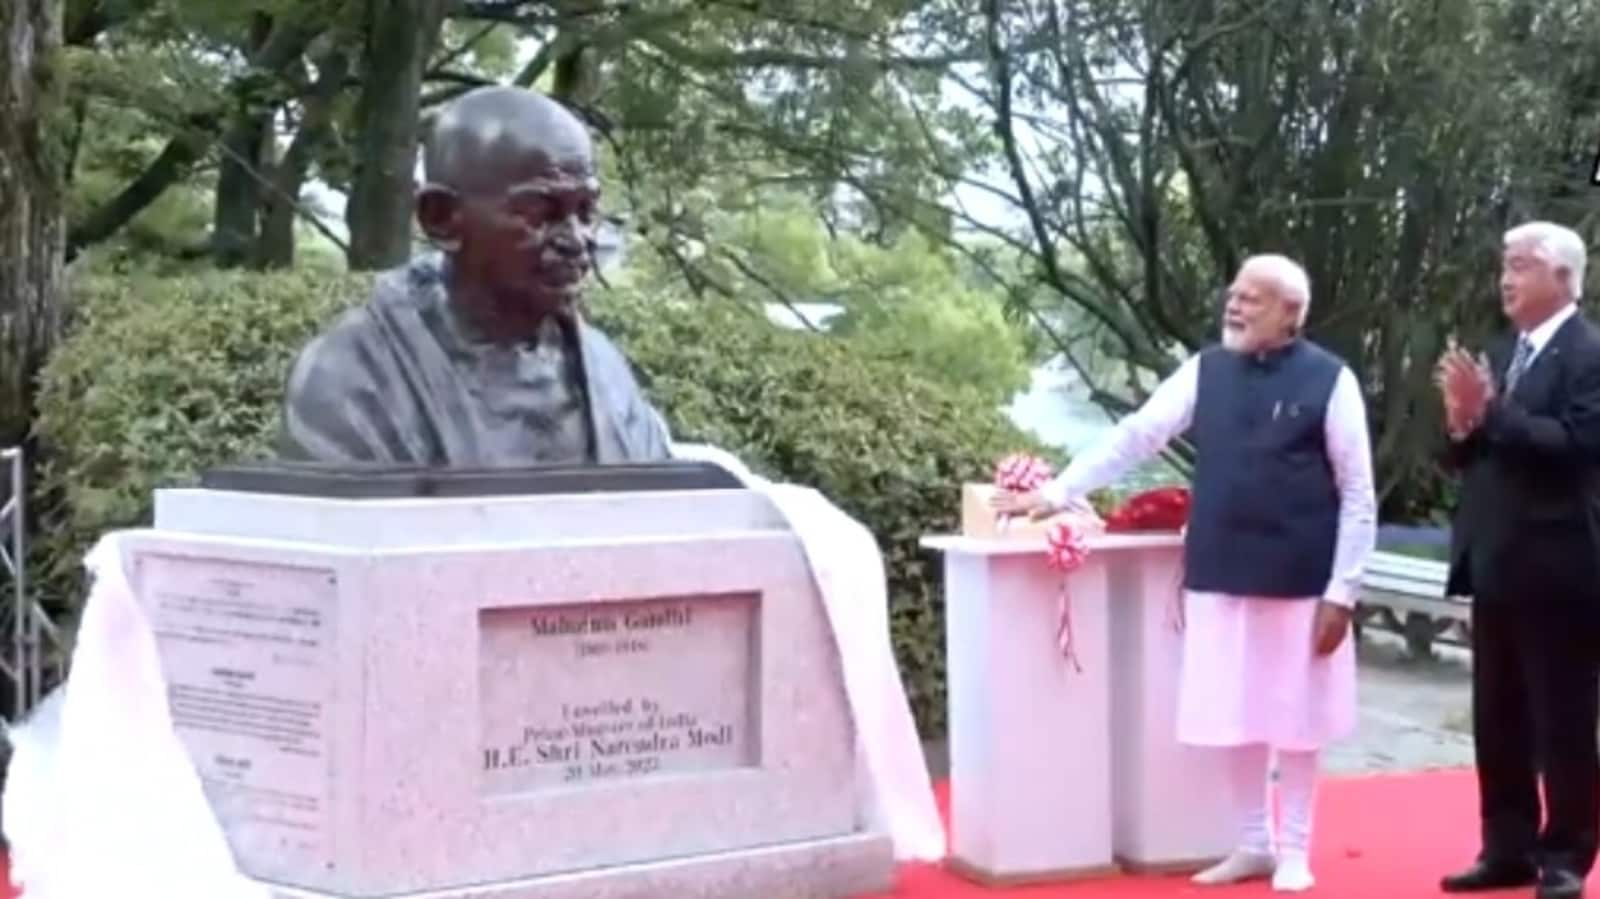 Watch: PM Modi unveils bust of Mahatma Gandhi in Japan’s Hiroshima | Latest News India